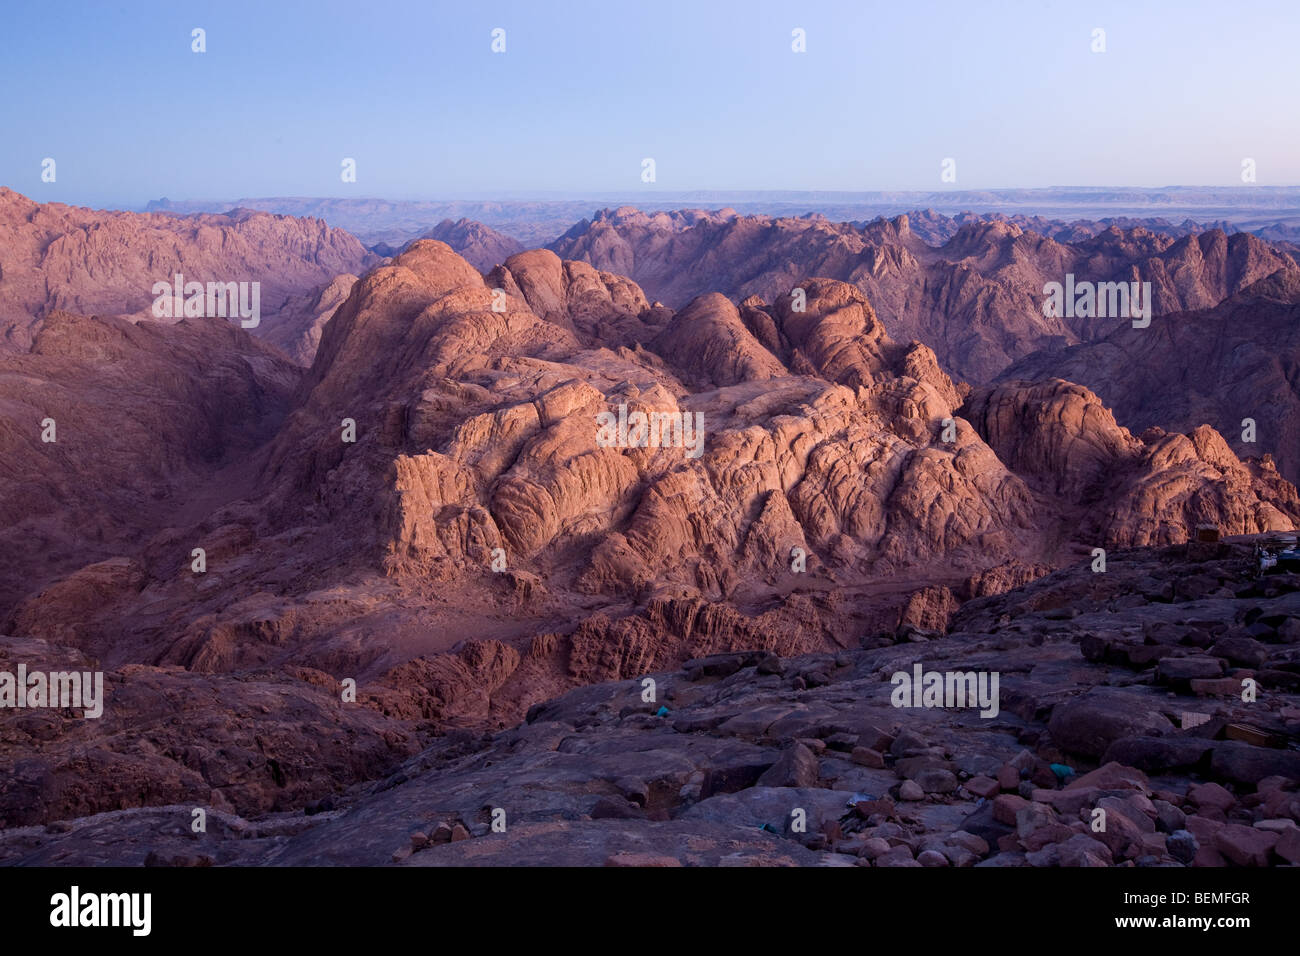 dawn sunrise over the arid barren landscape of Mount Sinai, Egypt, Middle East Stock Photo